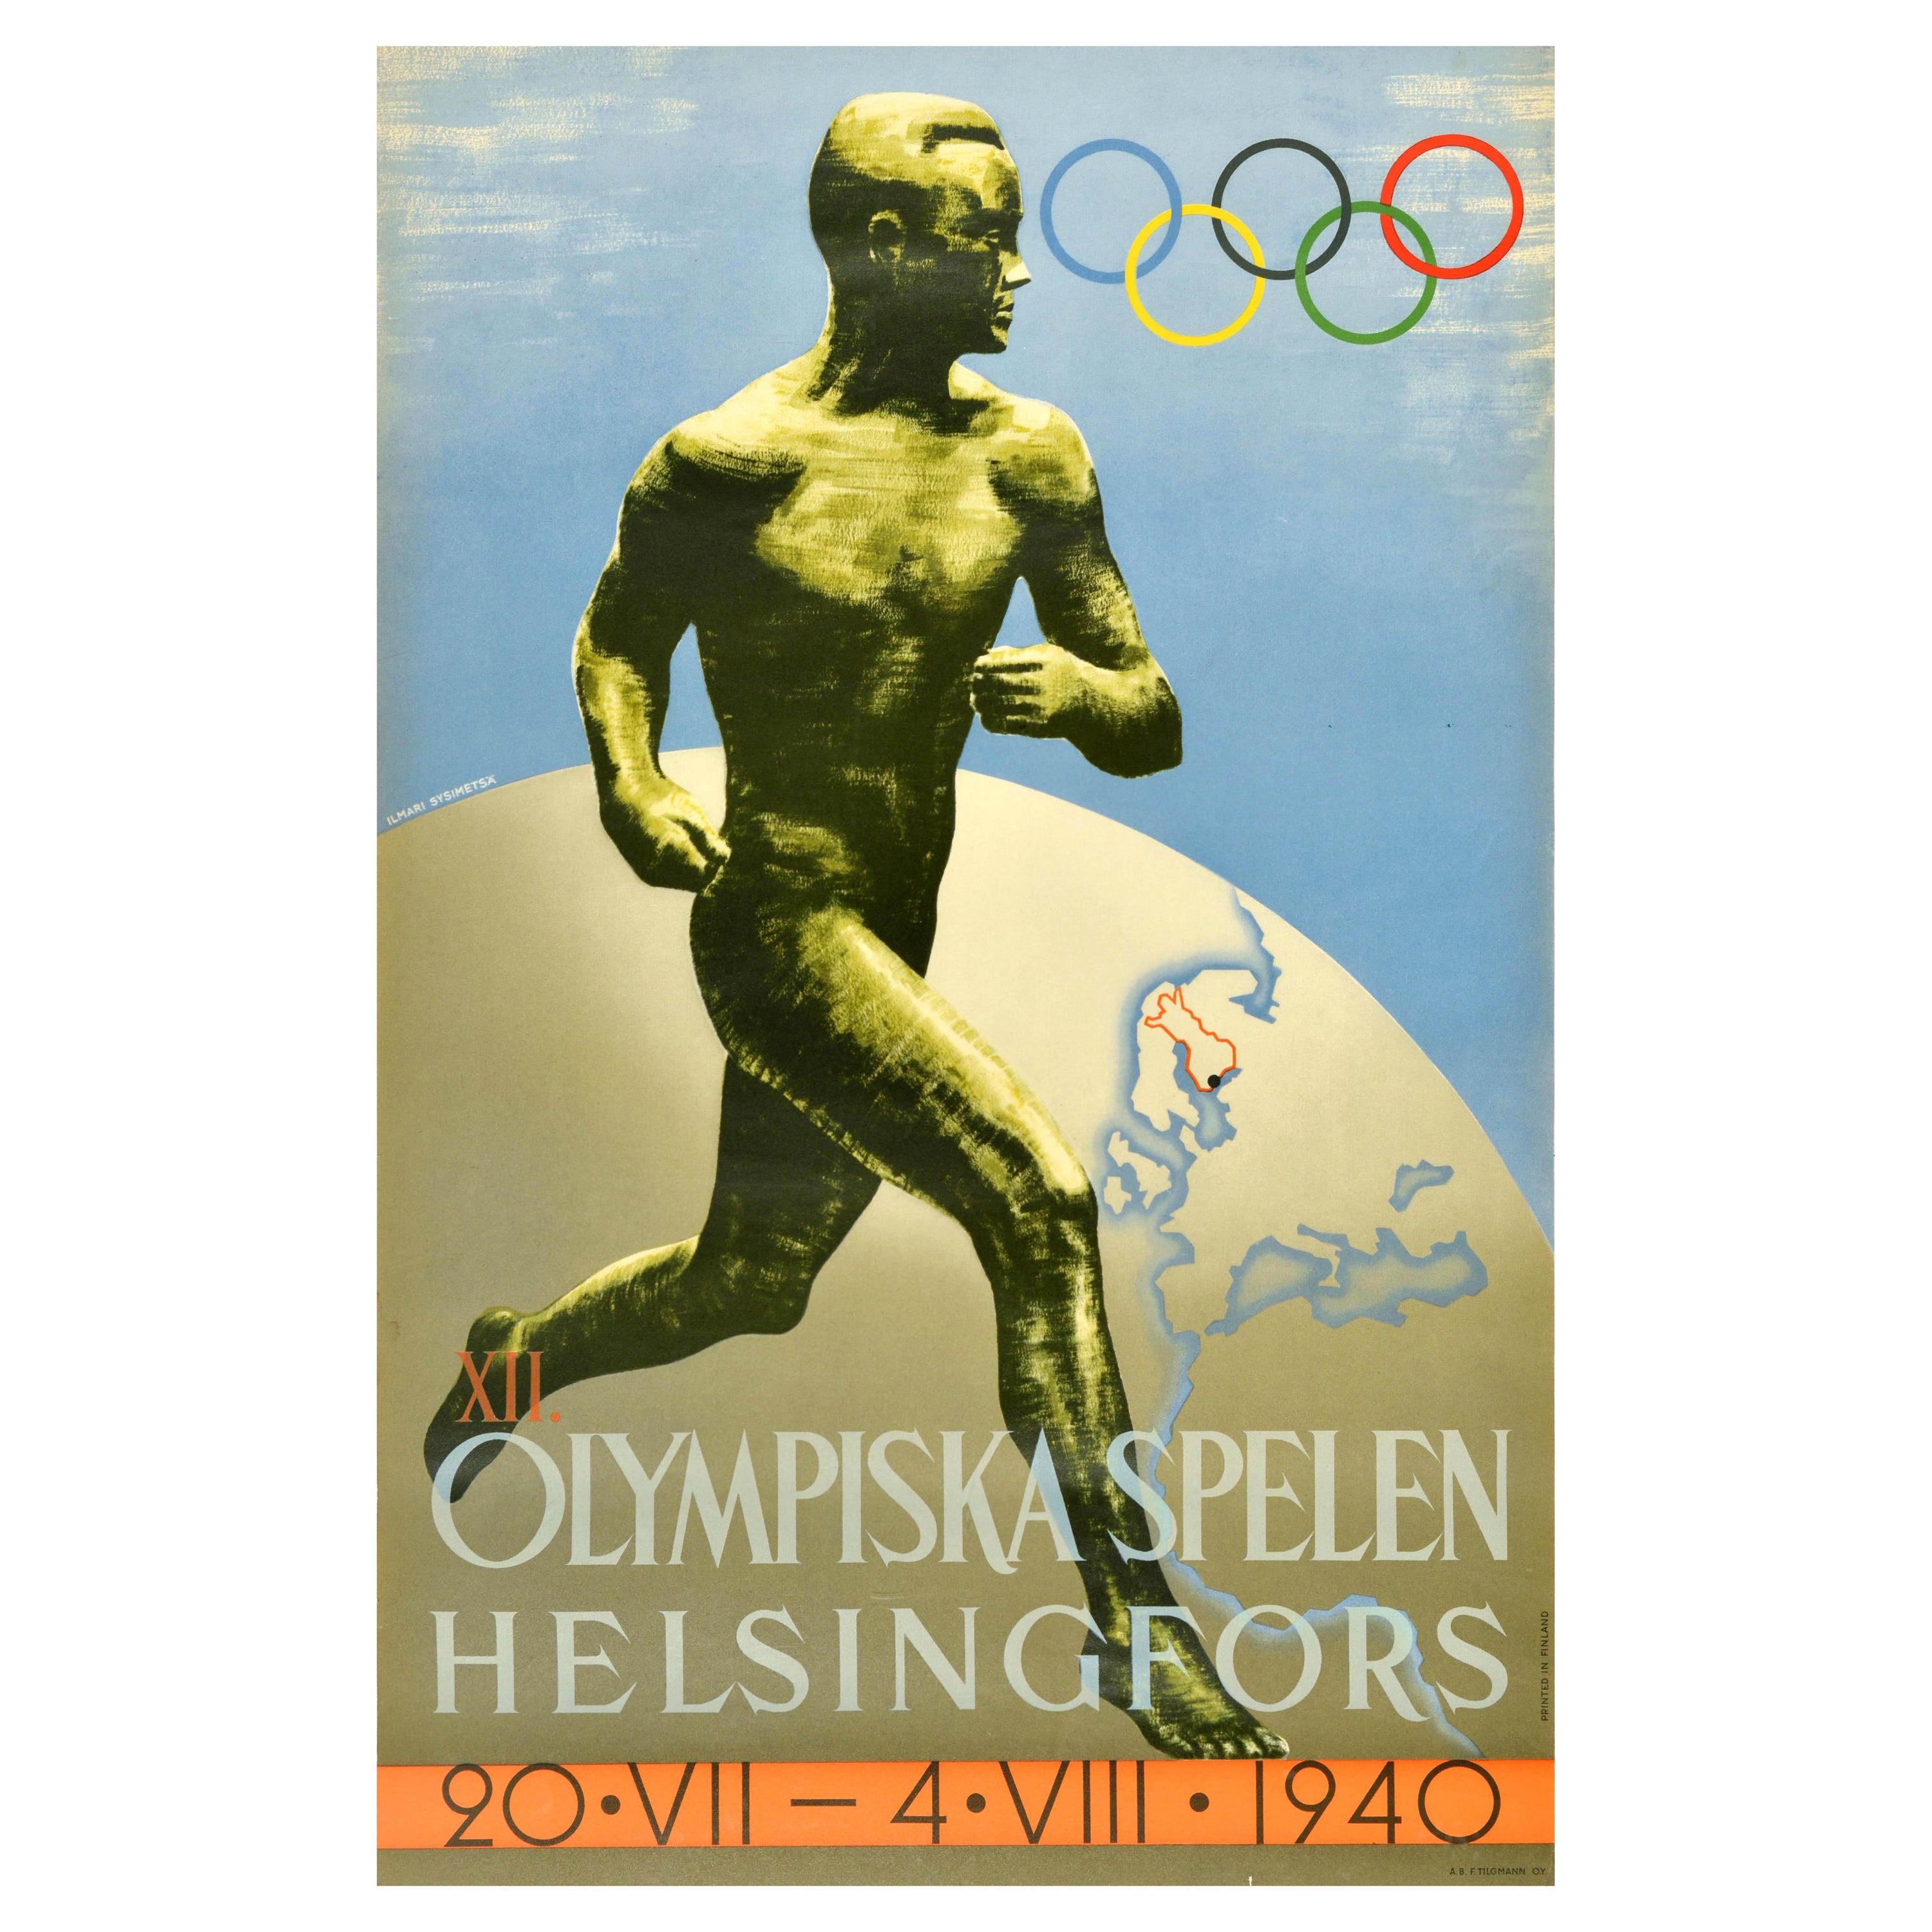 Original Vintage Sports Poster Olympic Games Helsinki 1940 Finland Athlete For Sale